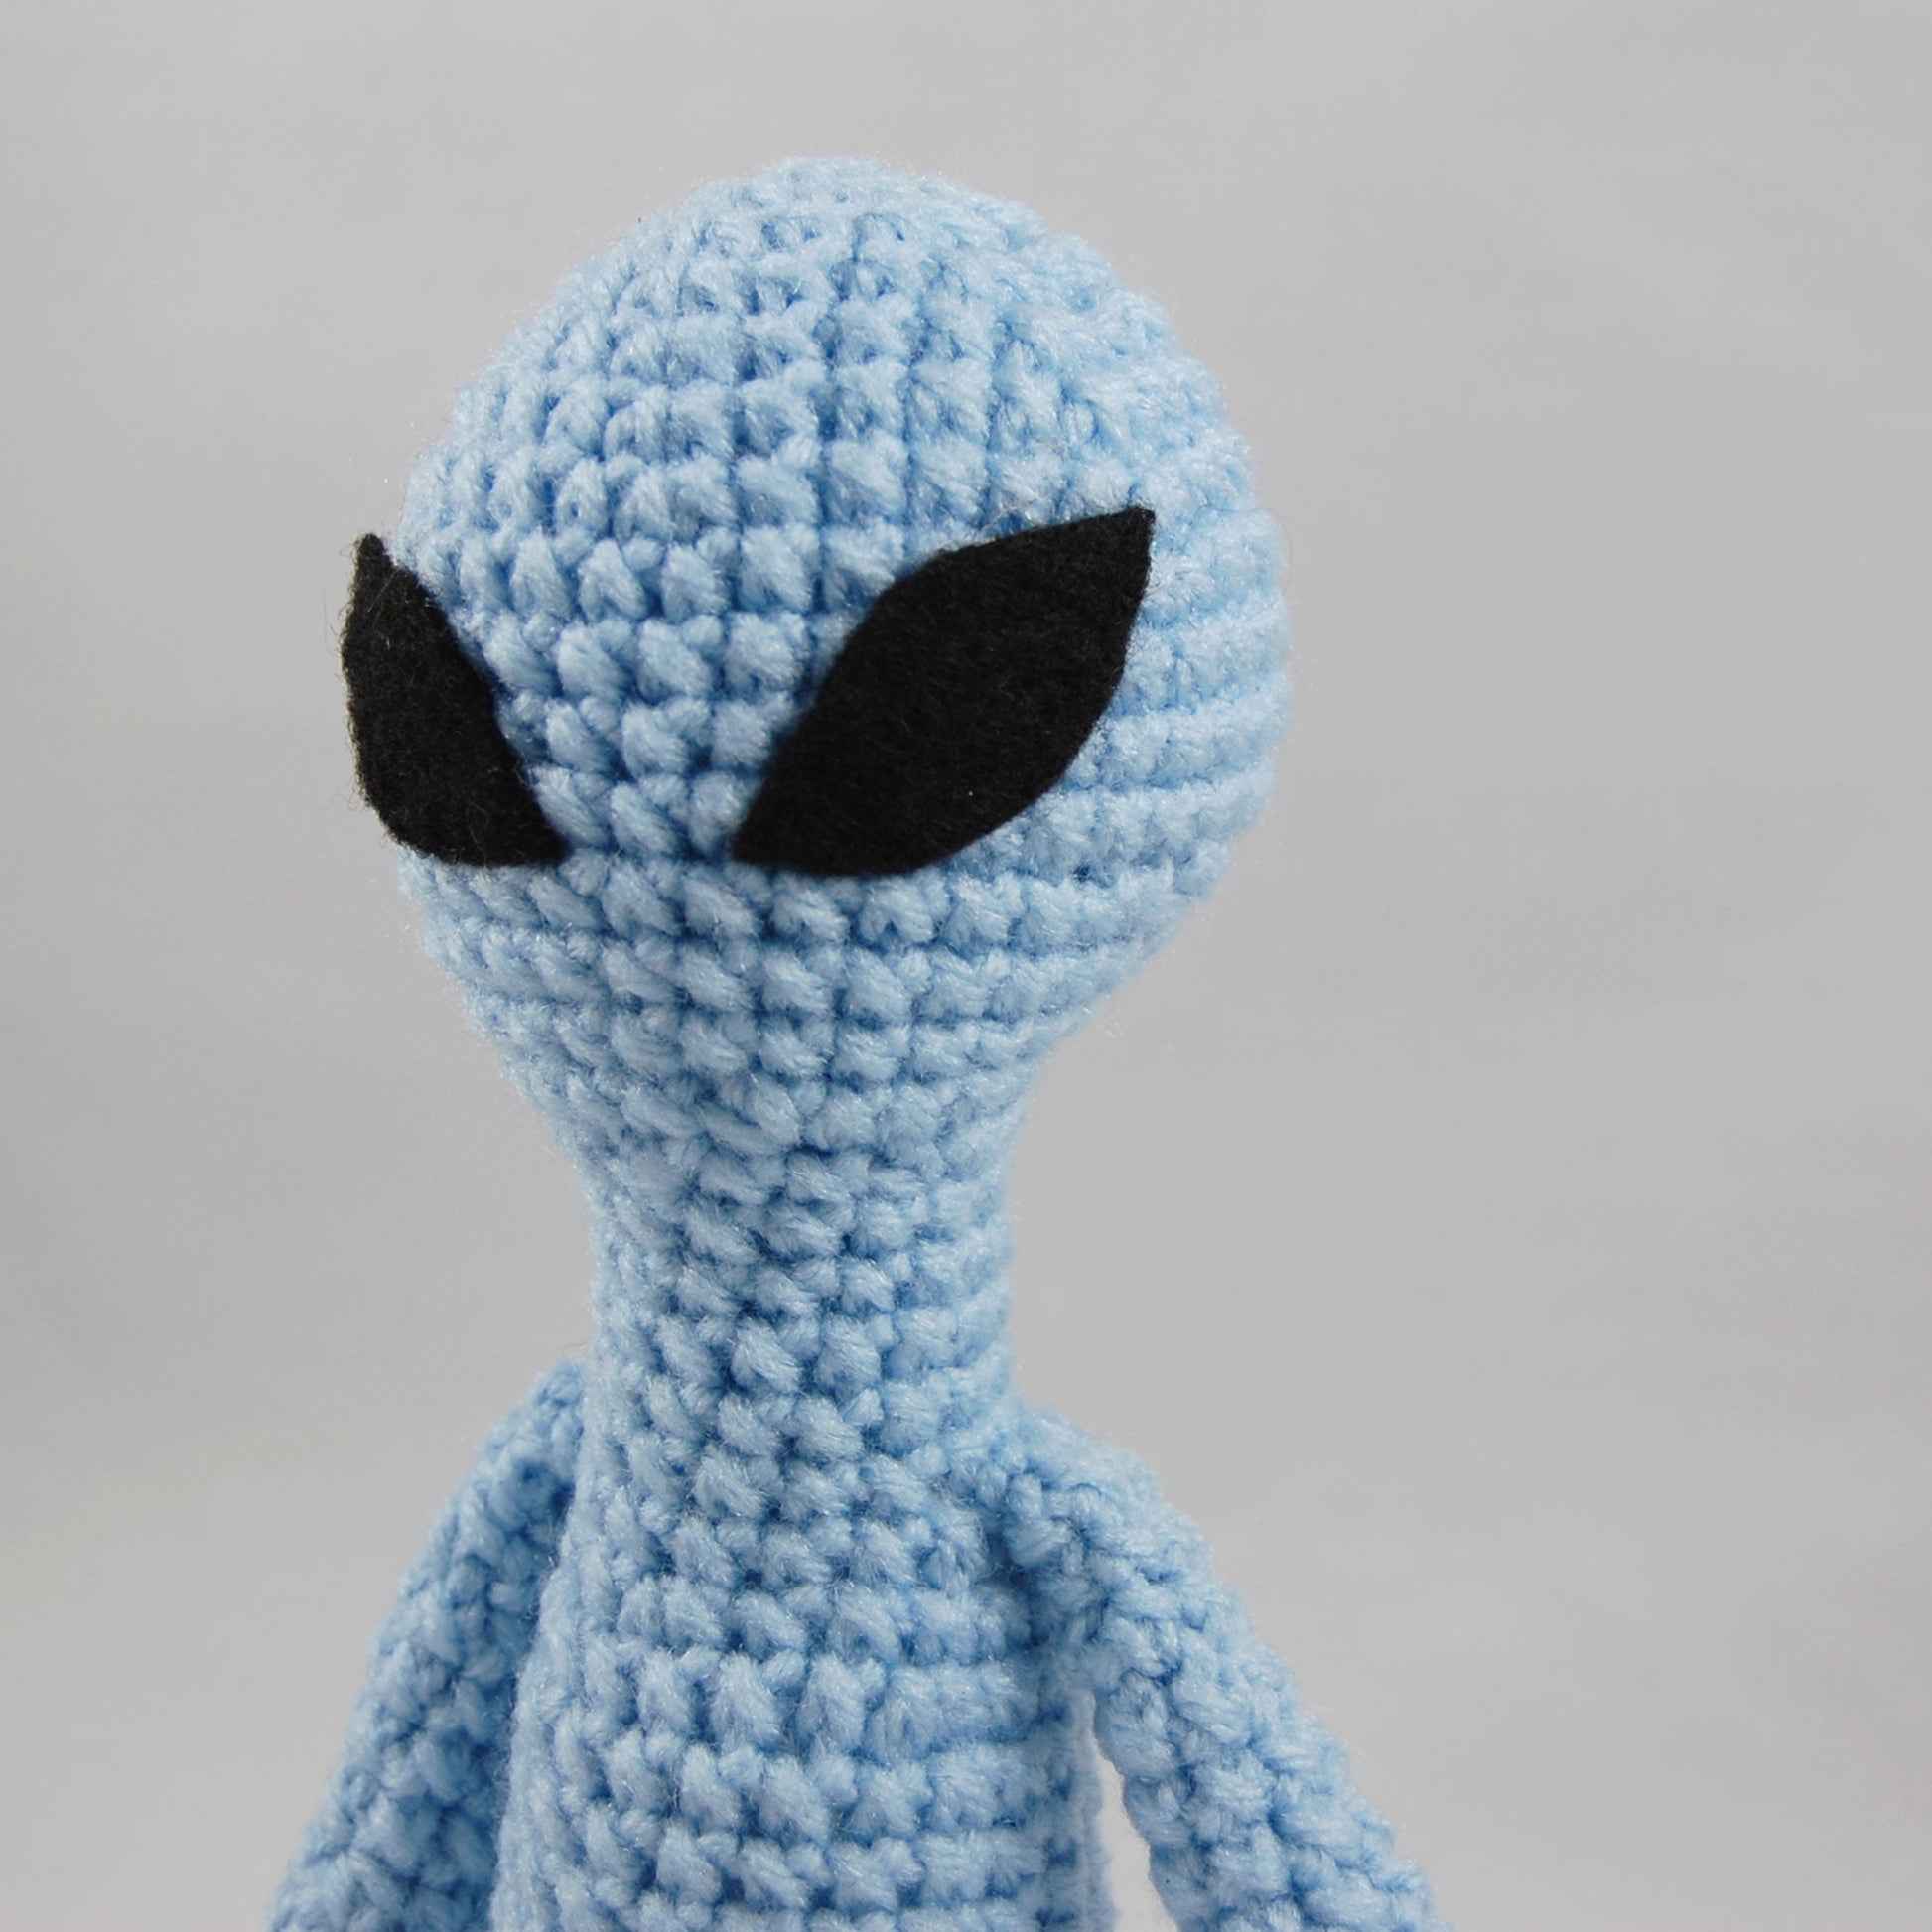 close up of head of alien plush